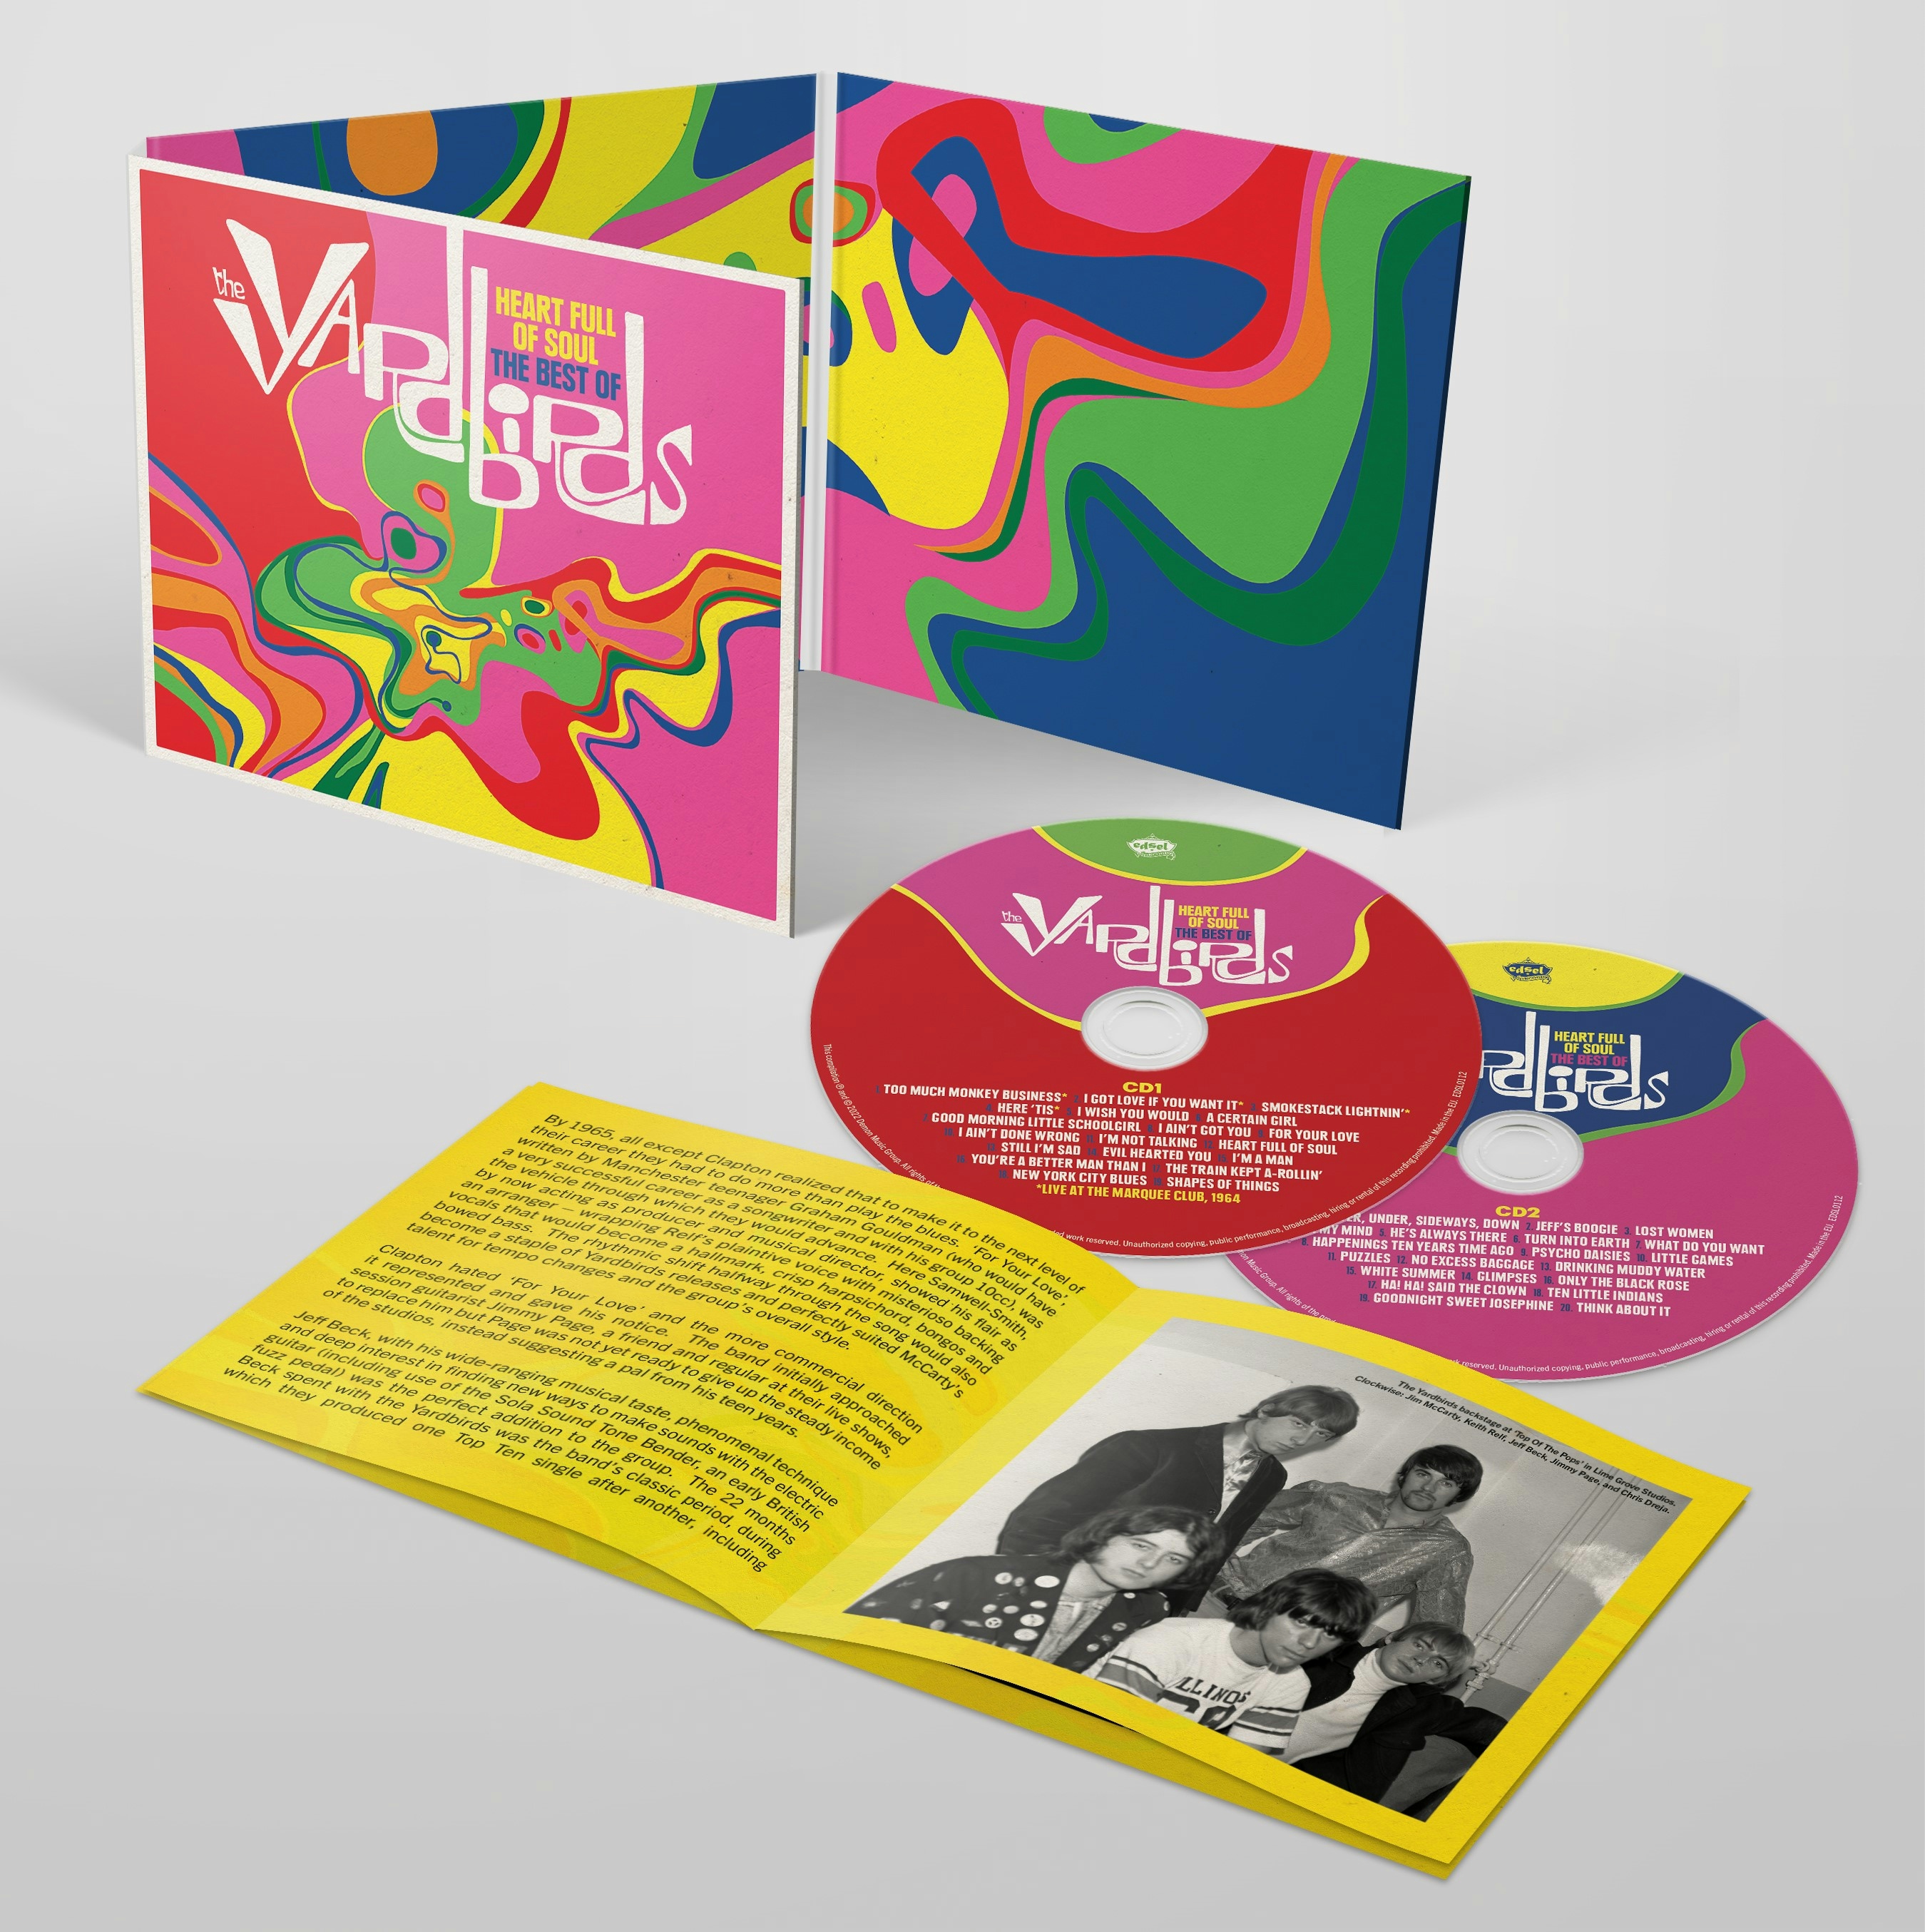 Album artwork for Album artwork for Heart Full Of Soul – The Best Of by The Yardbirds by Heart Full Of Soul – The Best Of - The Yardbirds